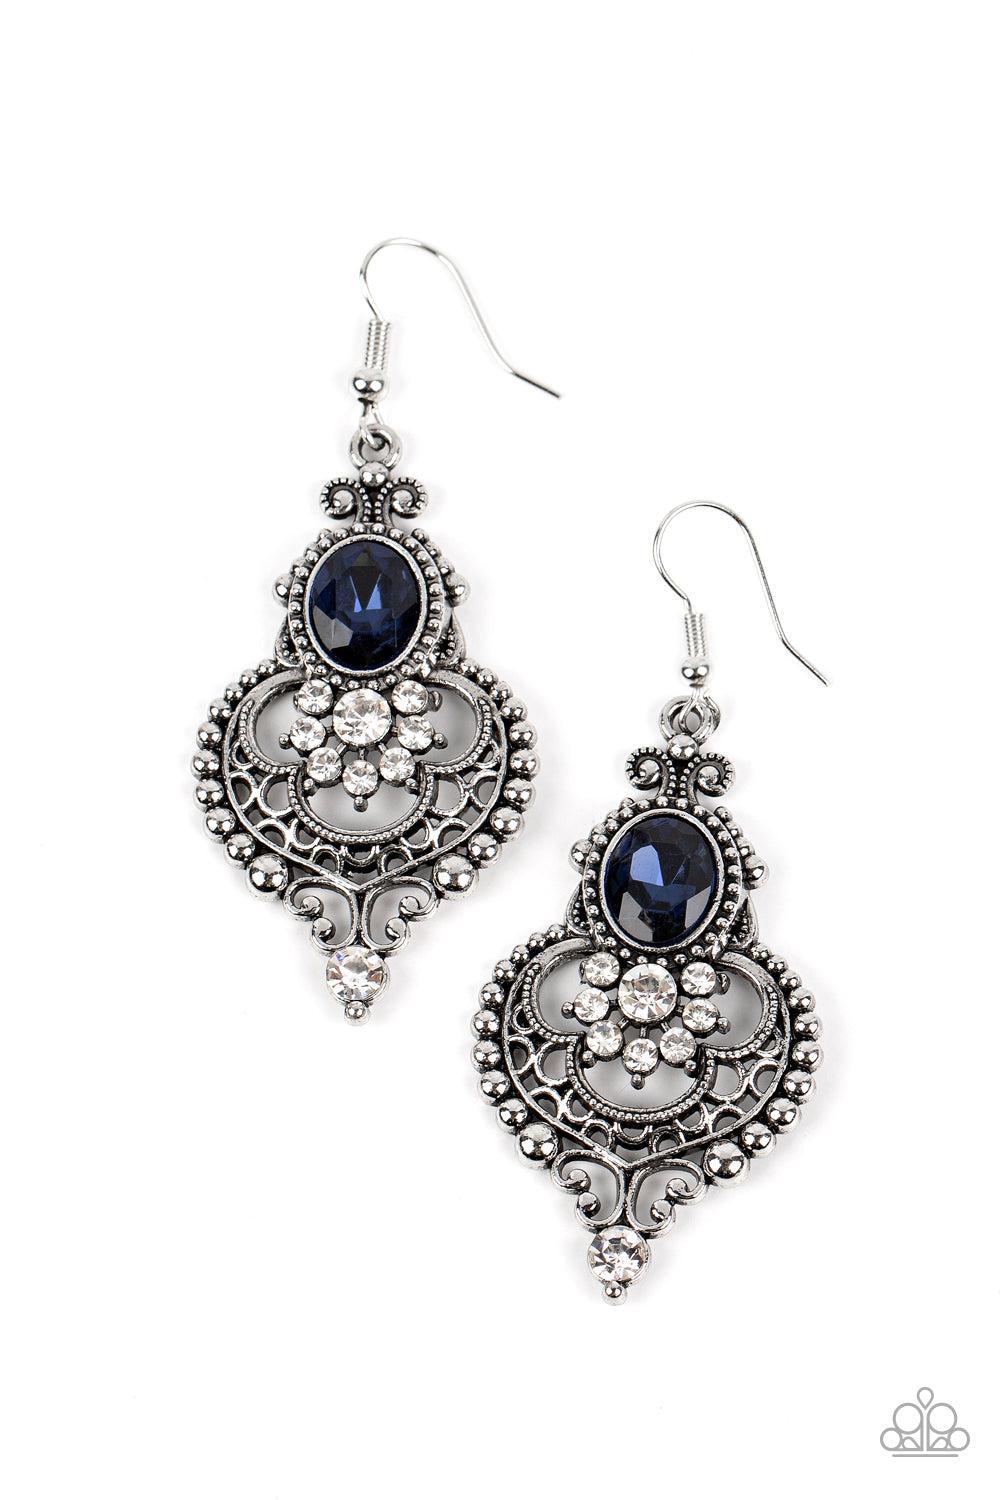 Castle Chateau Blue Rhinestone Earrings - Paparazzi Accessories- lightbox - CarasShop.com - $5 Jewelry by Cara Jewels